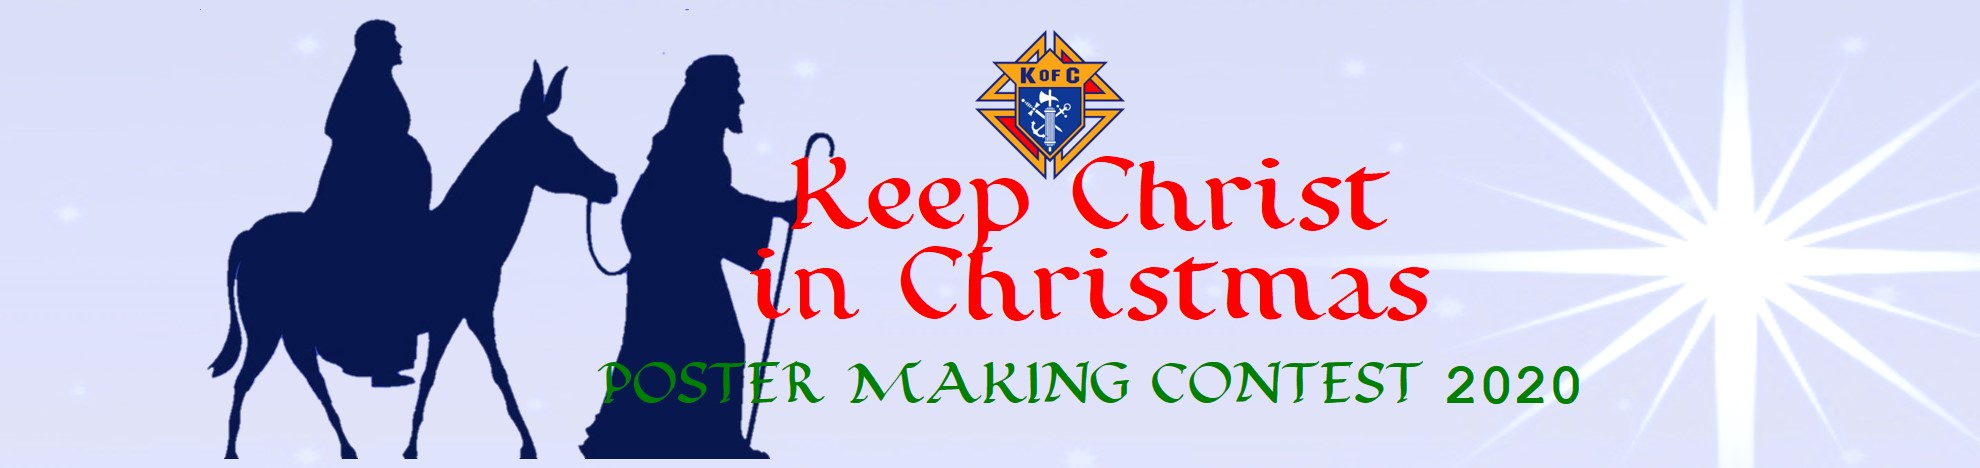 Header: Keep Christ in Christmas 2020